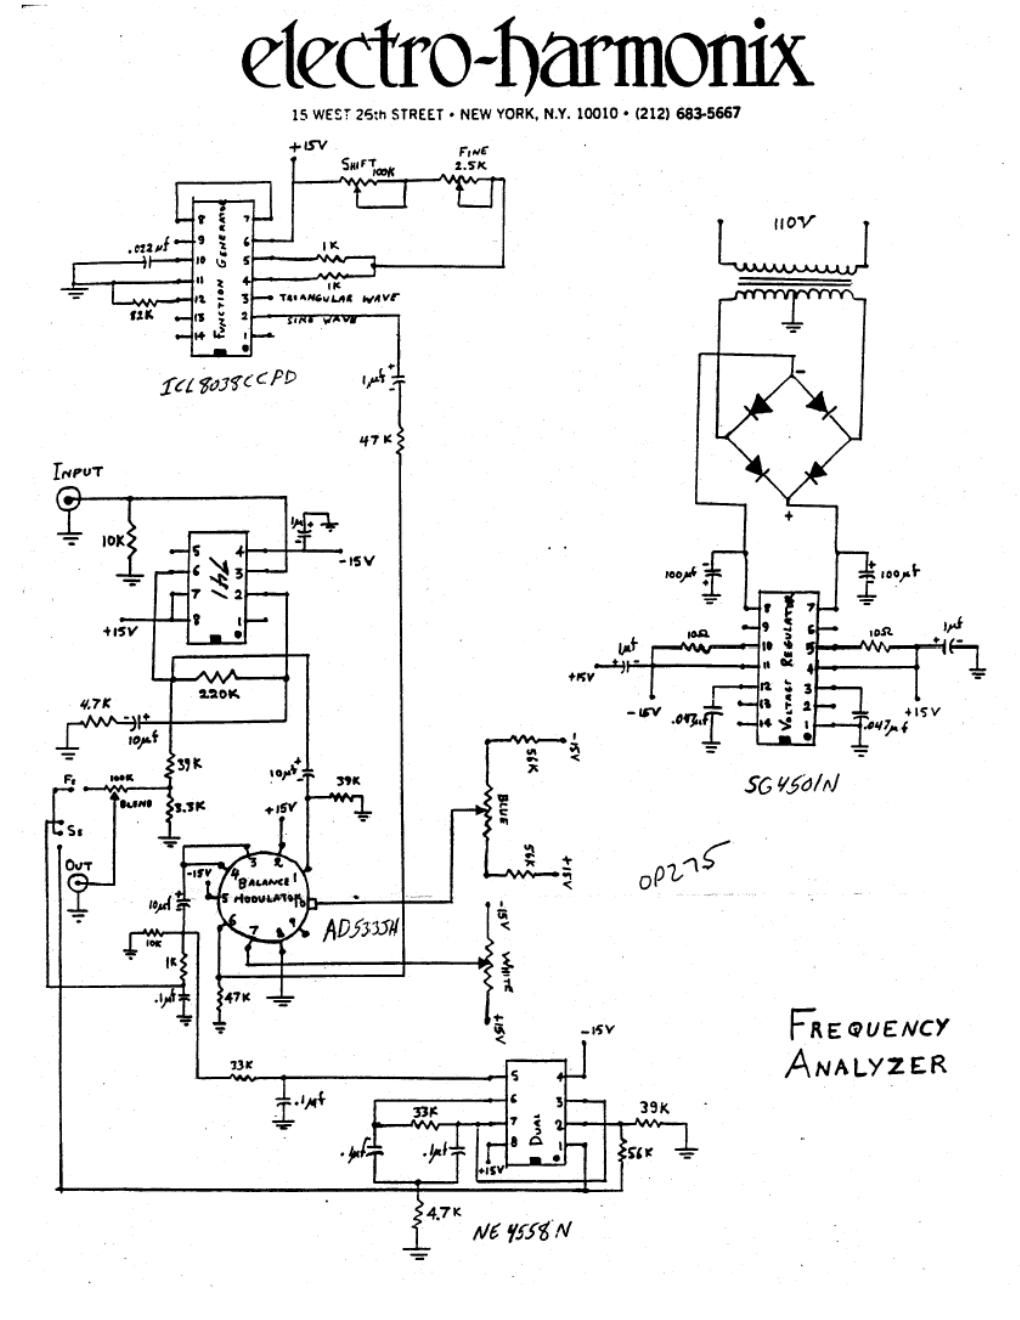 electro harmonix frequency analyzer old schematic